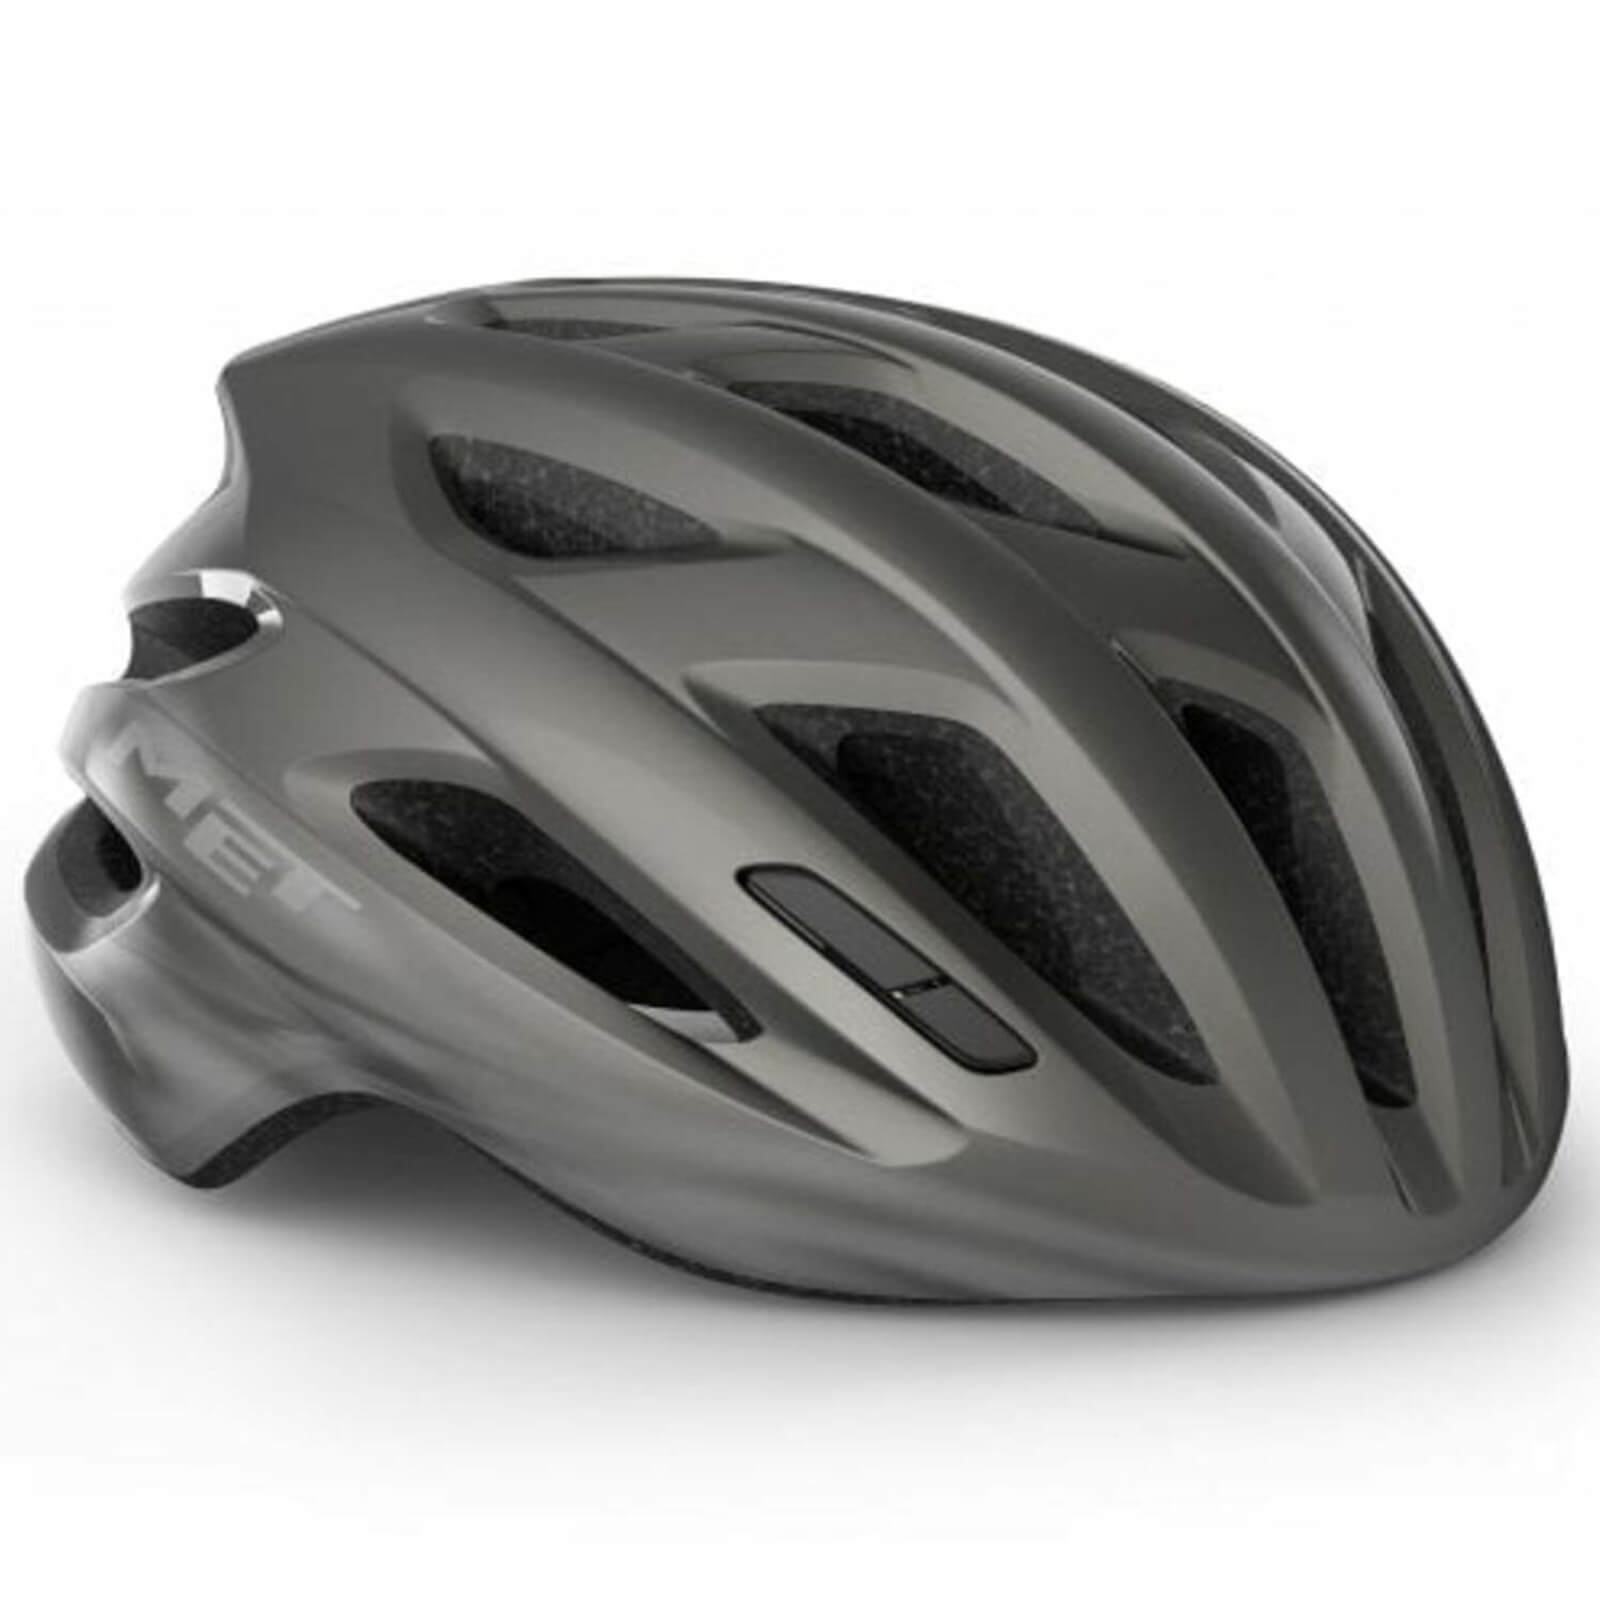 MET Idolo MIPS Road Helmet - UN - White